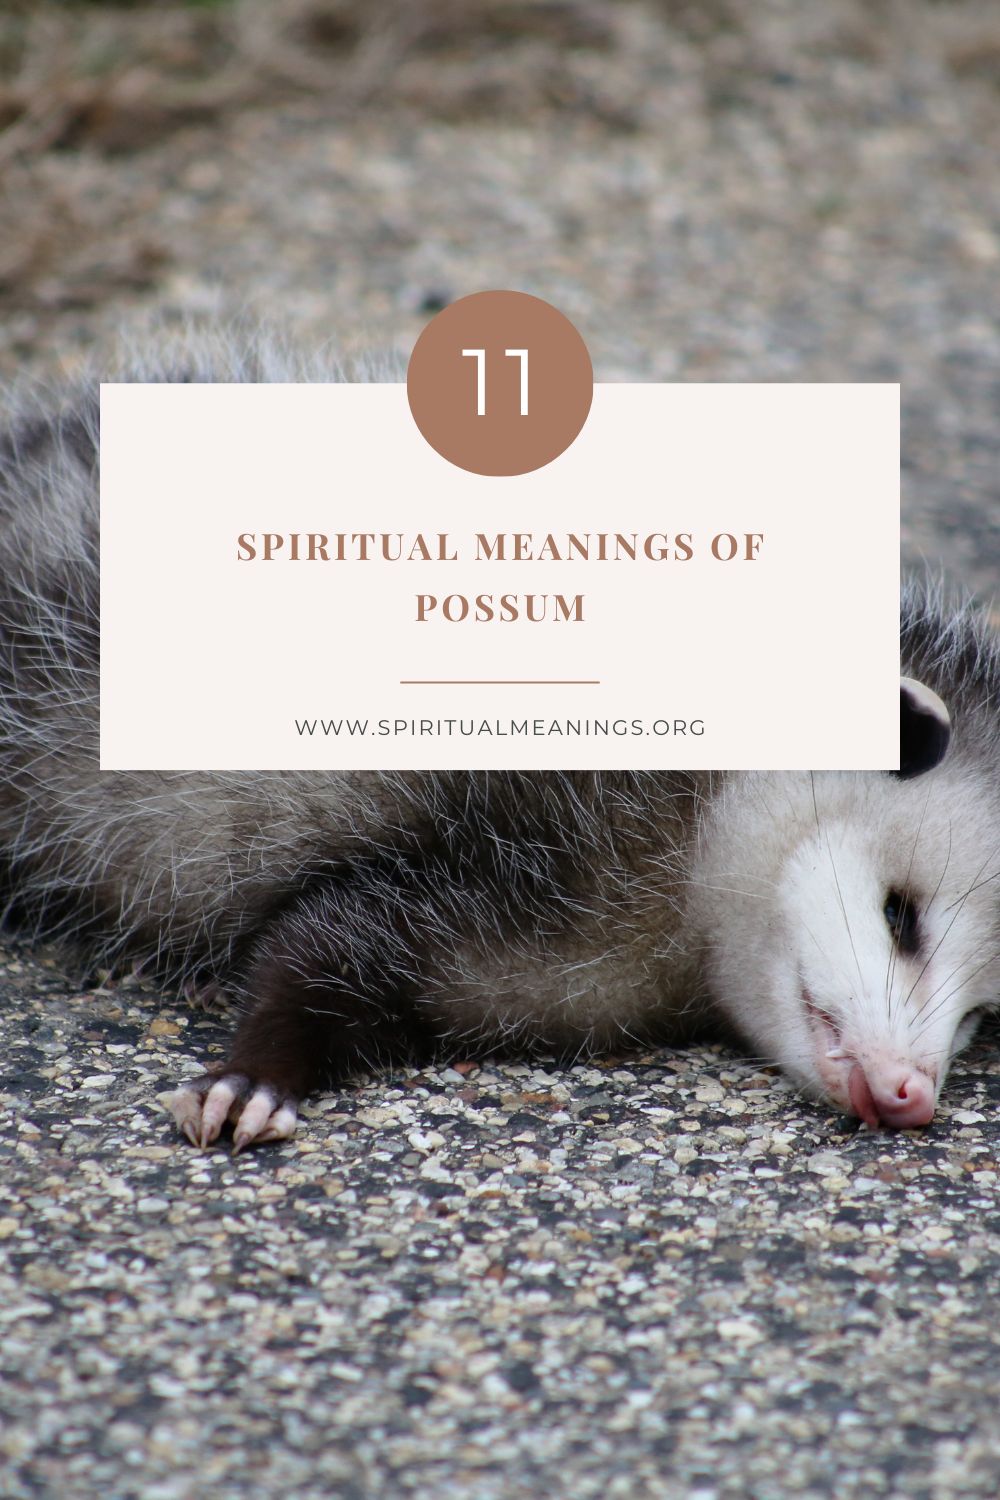 Summary: Possum Symbolism and Spiritual Meaning